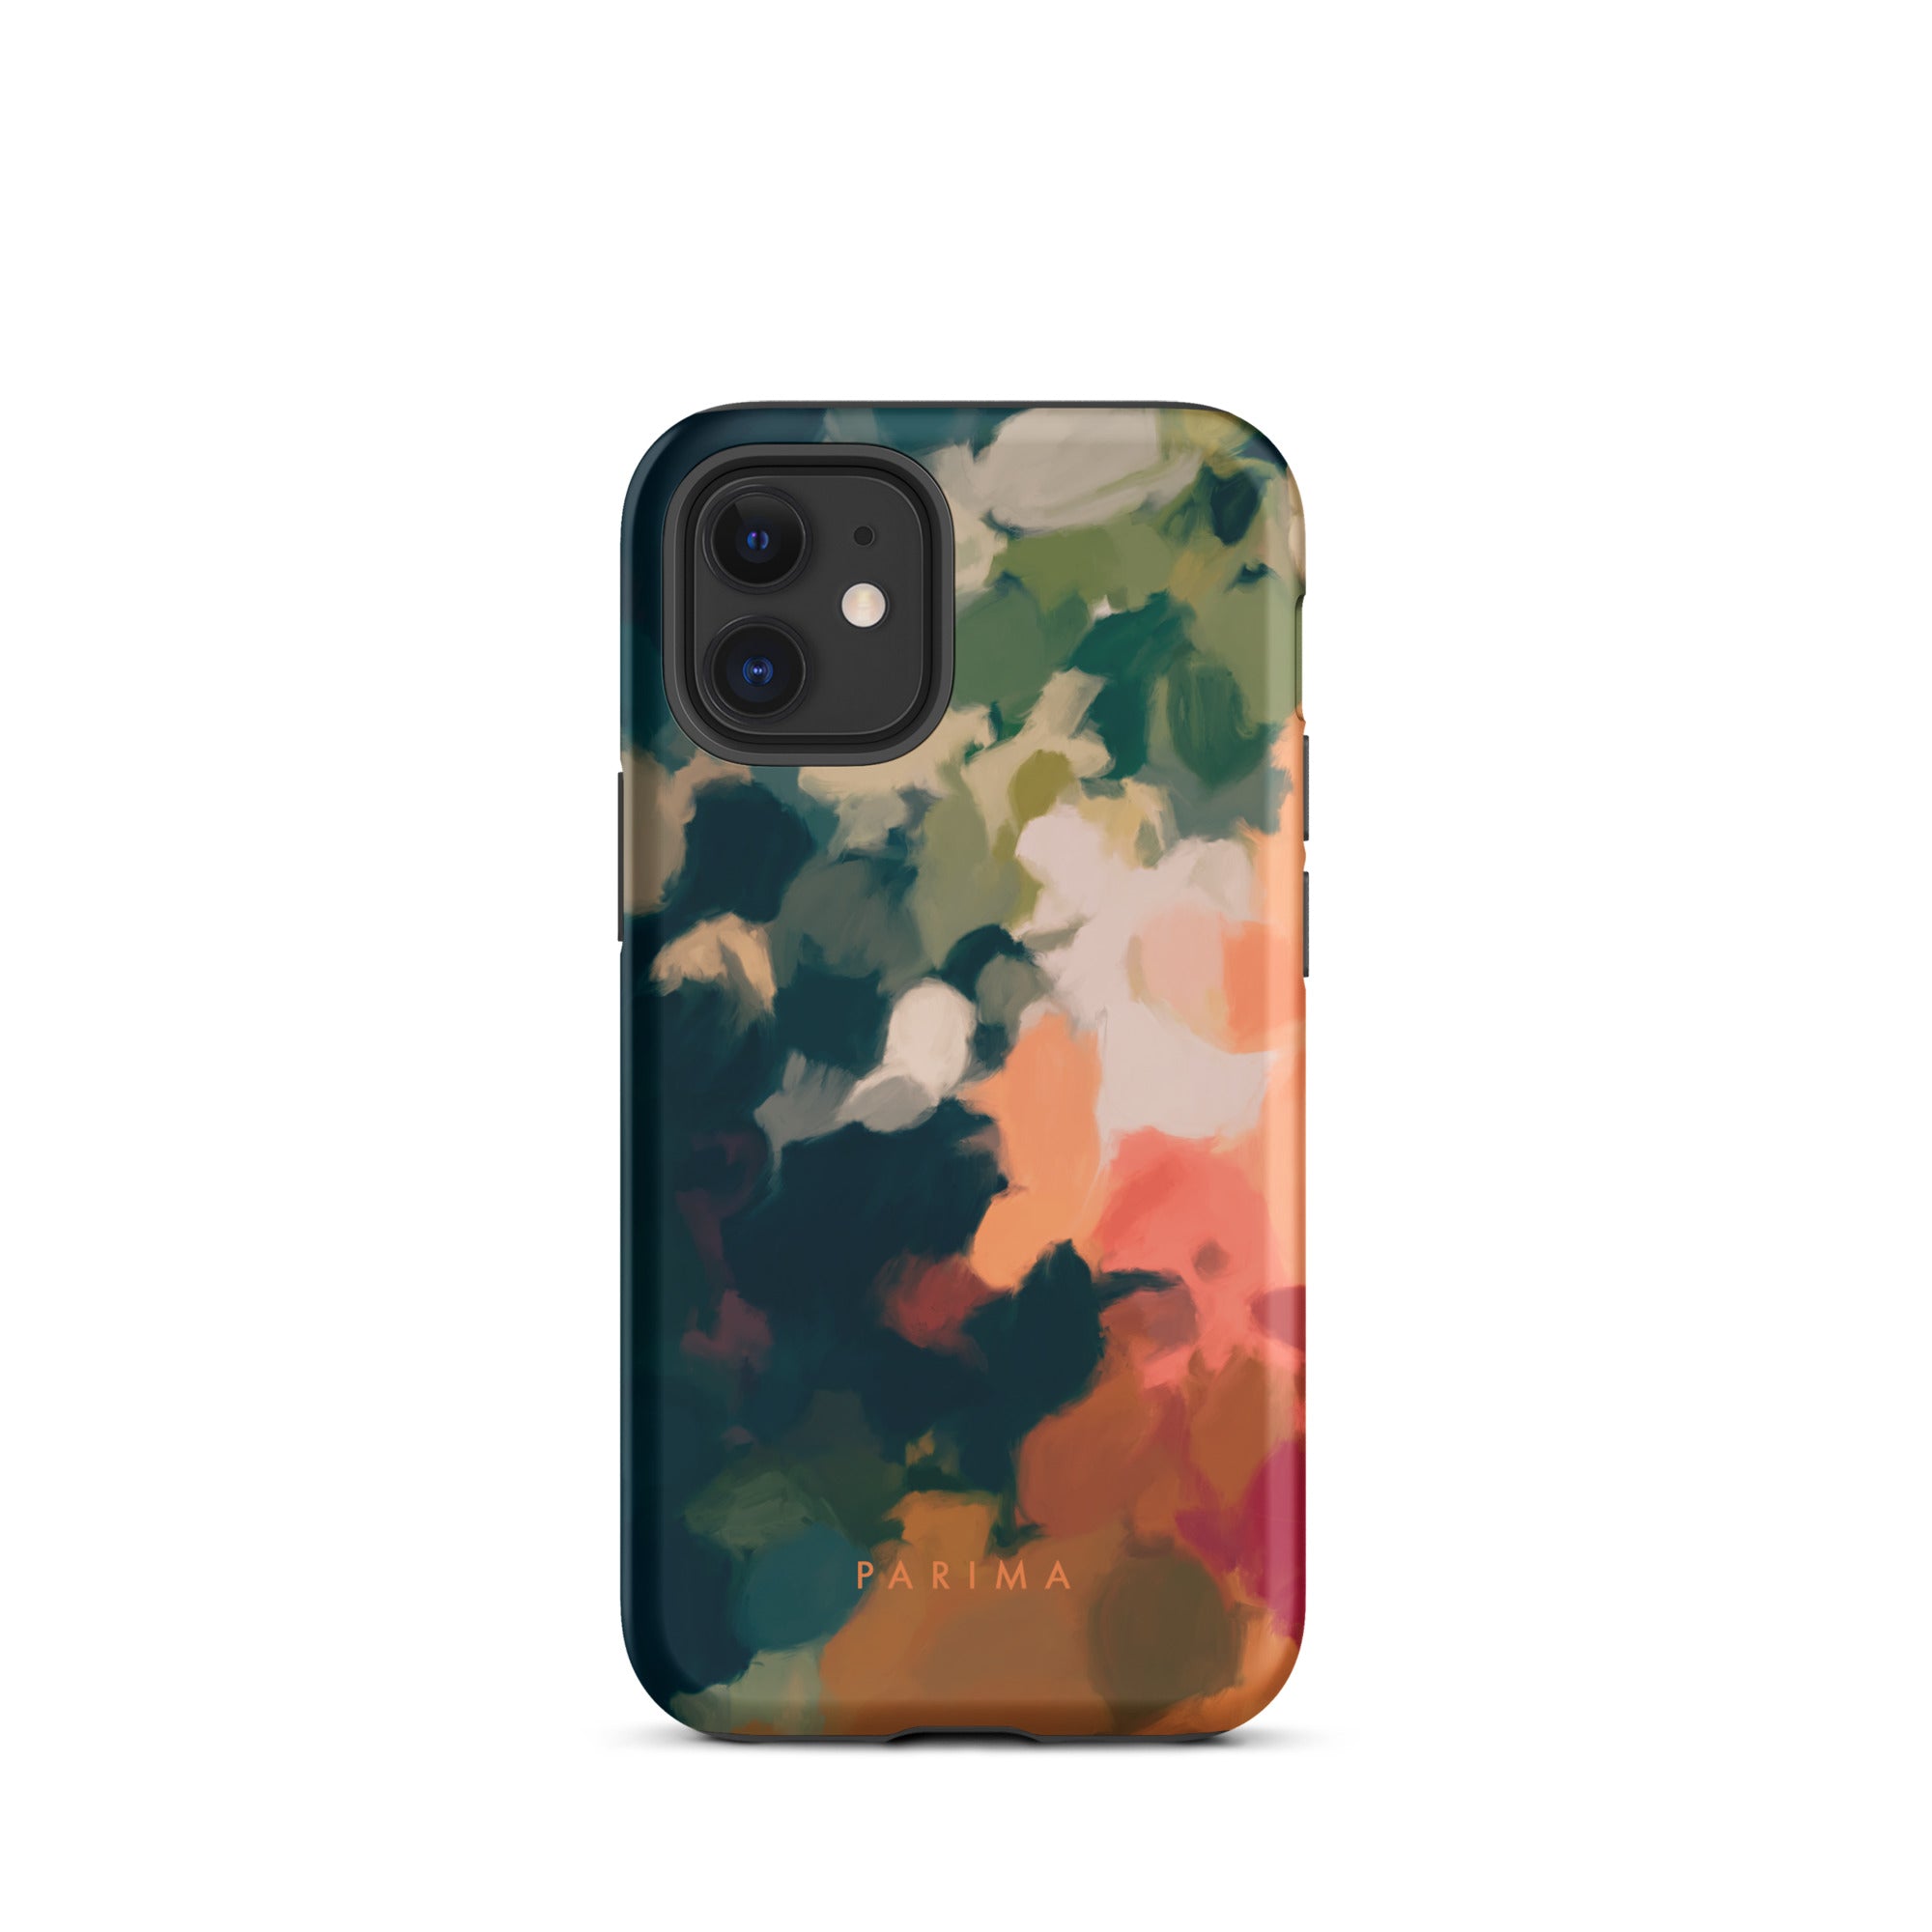 Ria, blue and orange abstract art - iPhone 12 mini tough case by Parima Studio